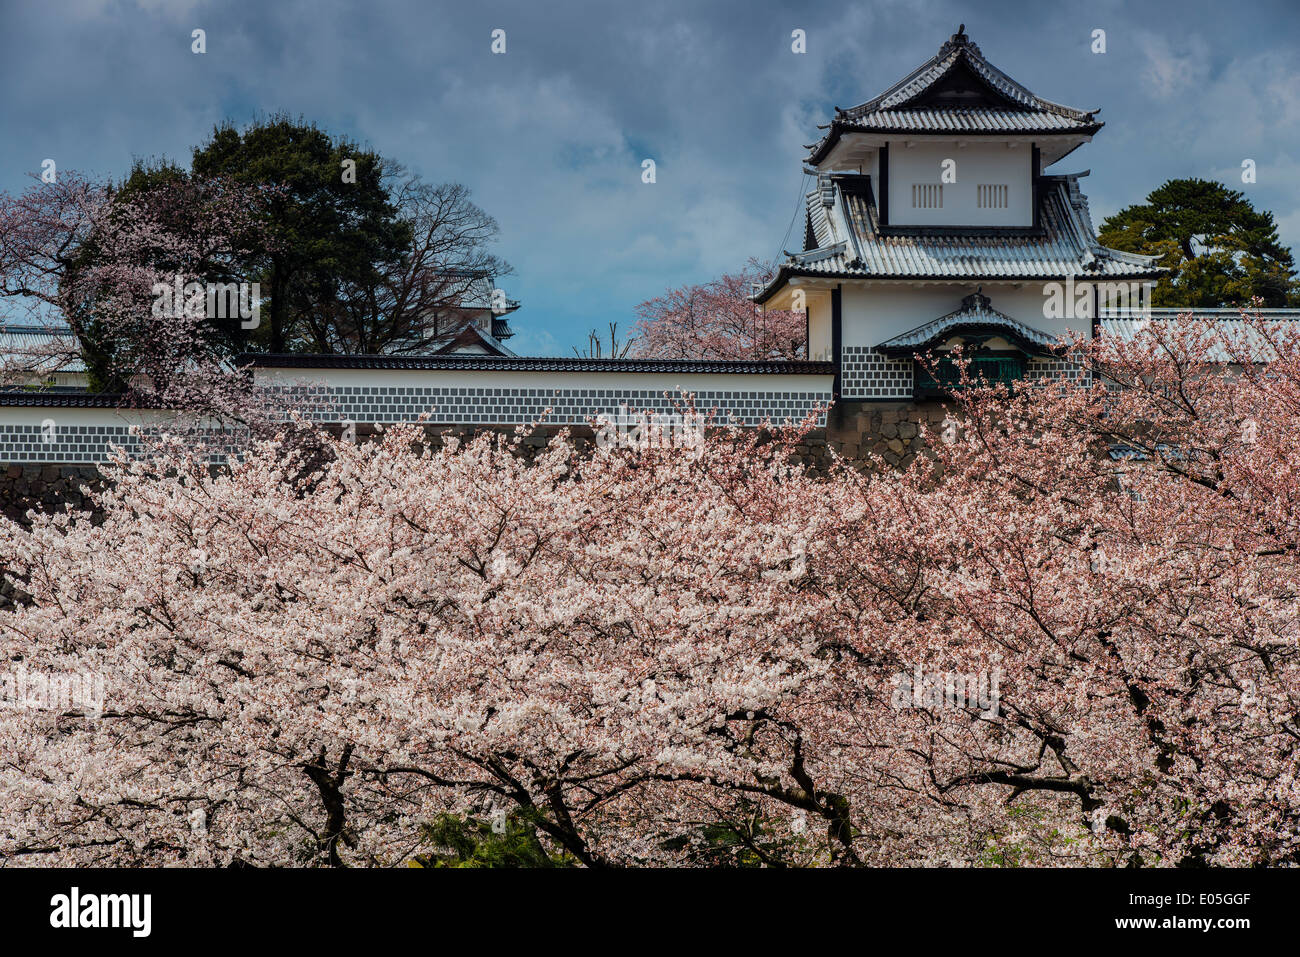 Blooming cherry trees in spring with Kanazawa castle behind, Kanazawa, Ishikawa Prefecture, Japan. Stock Photo